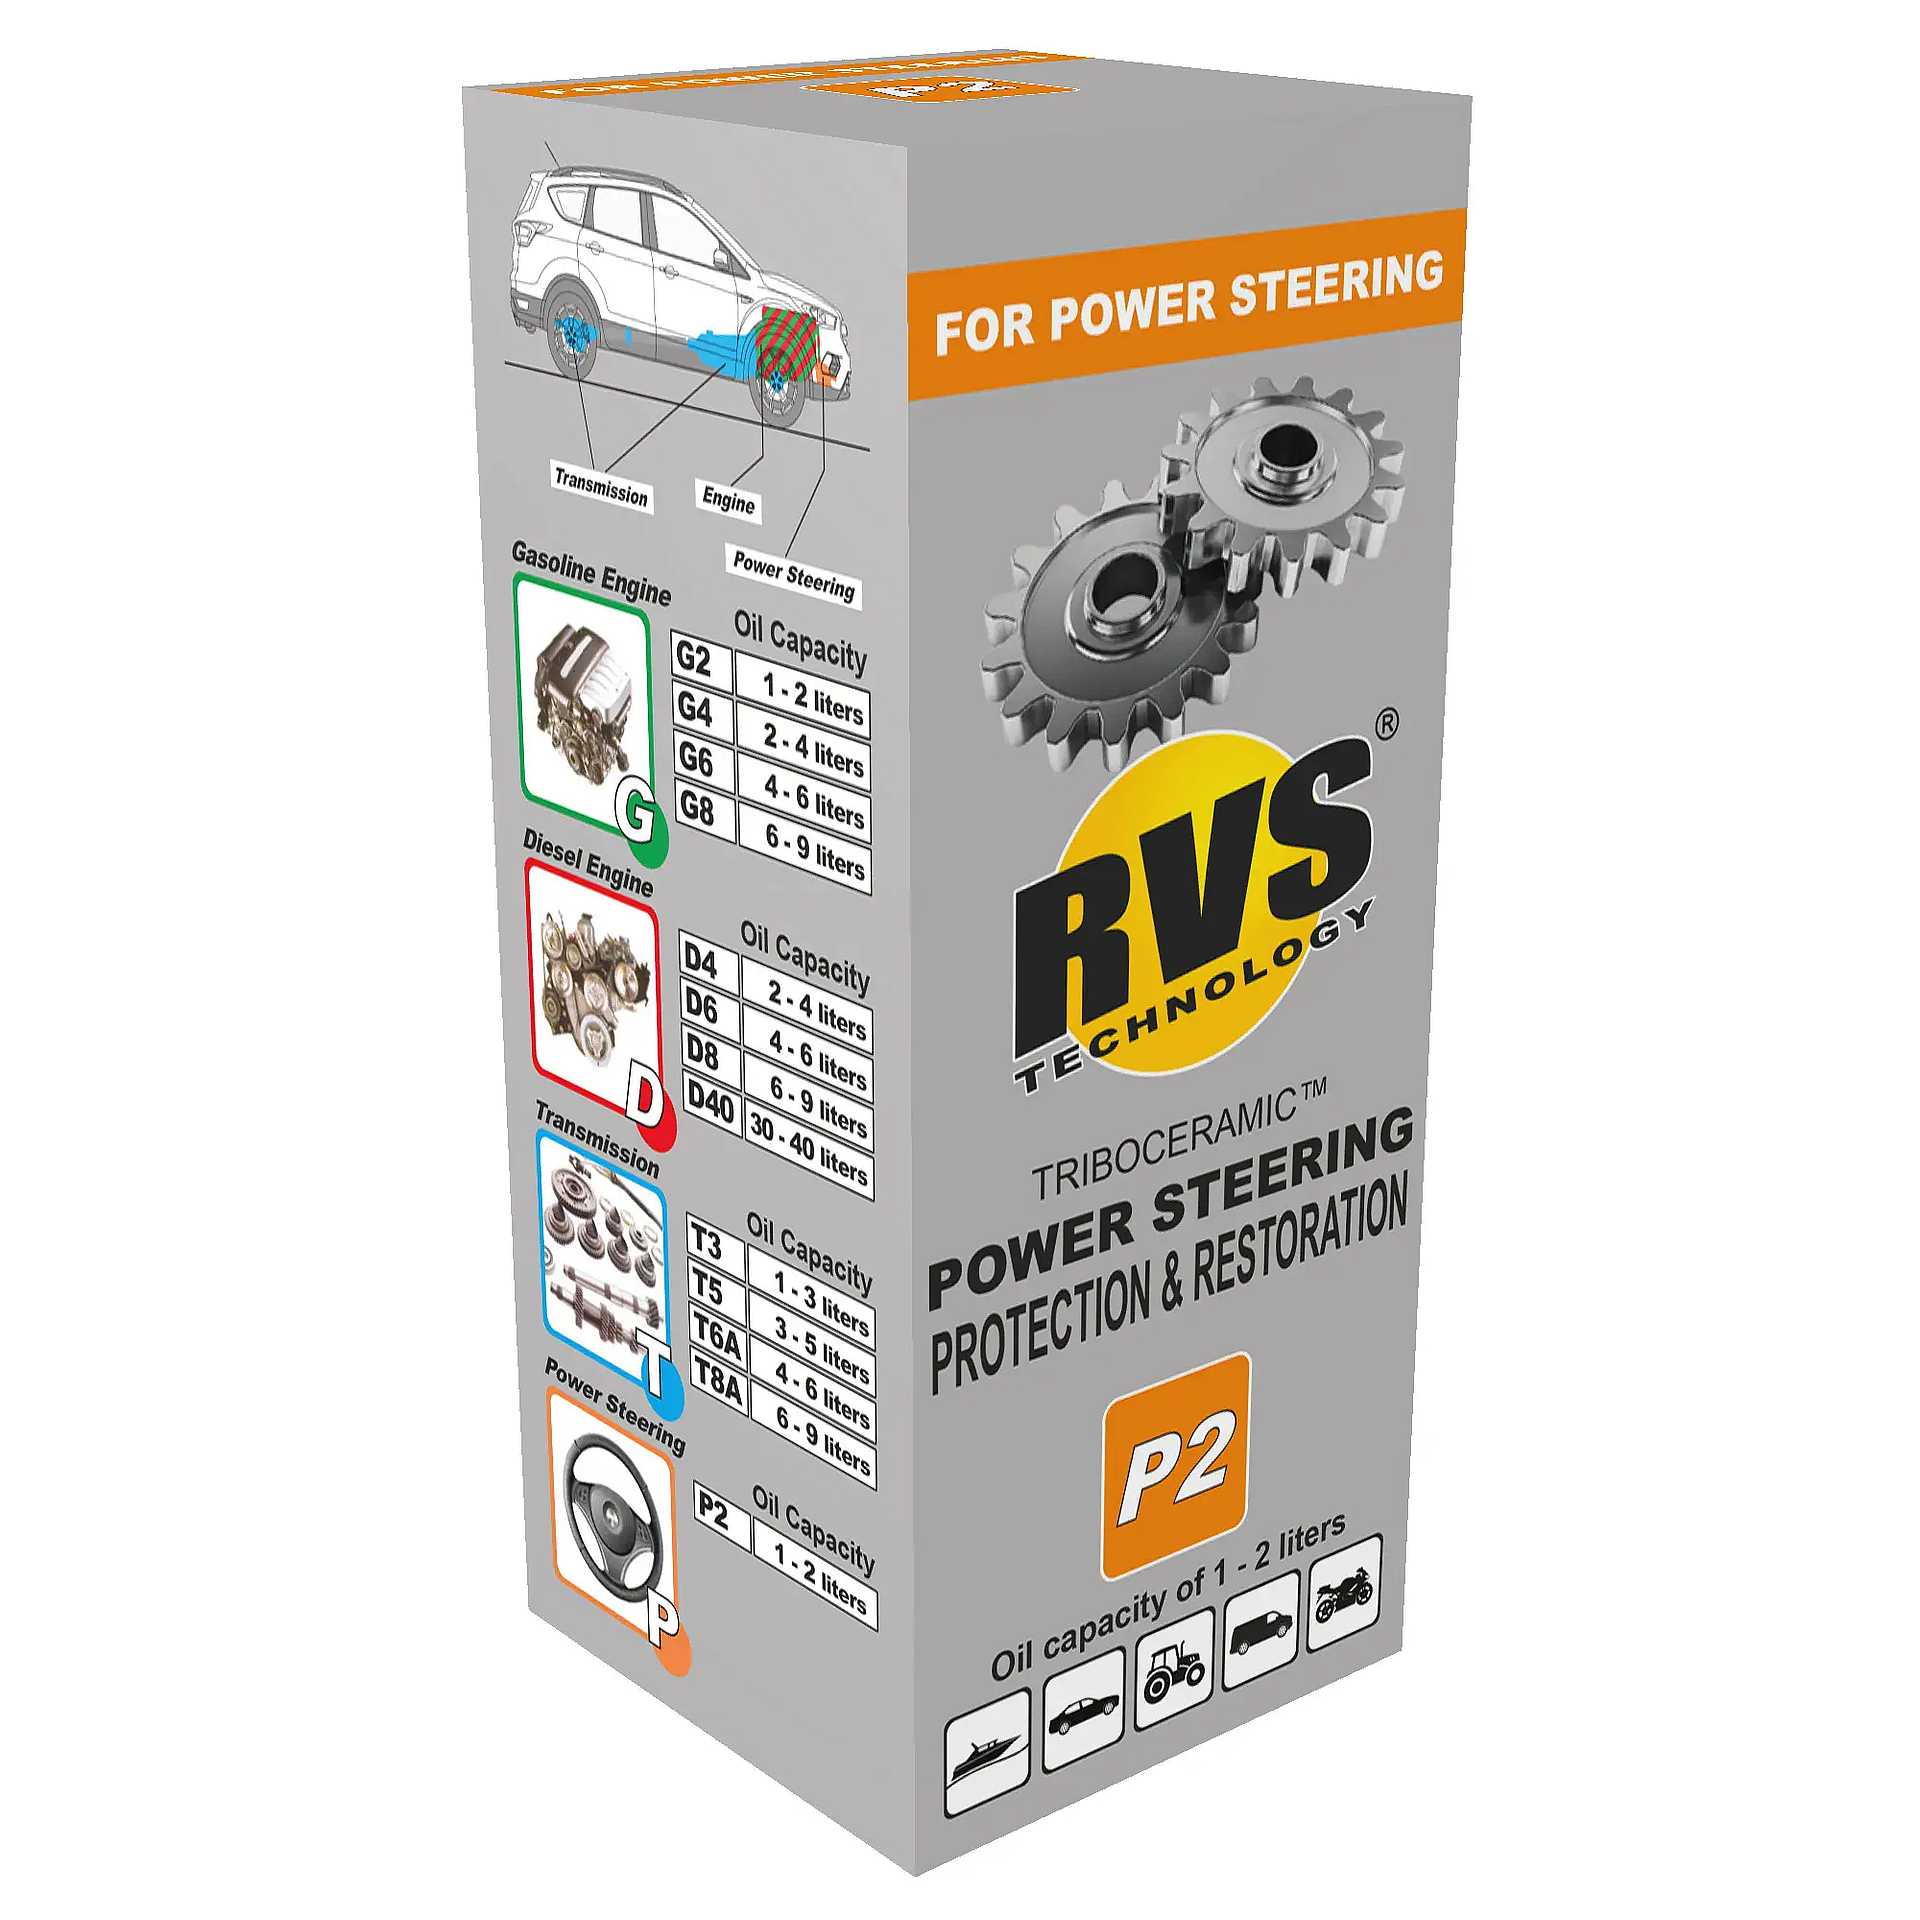 RVS Power Steering Protection & Restoration P2